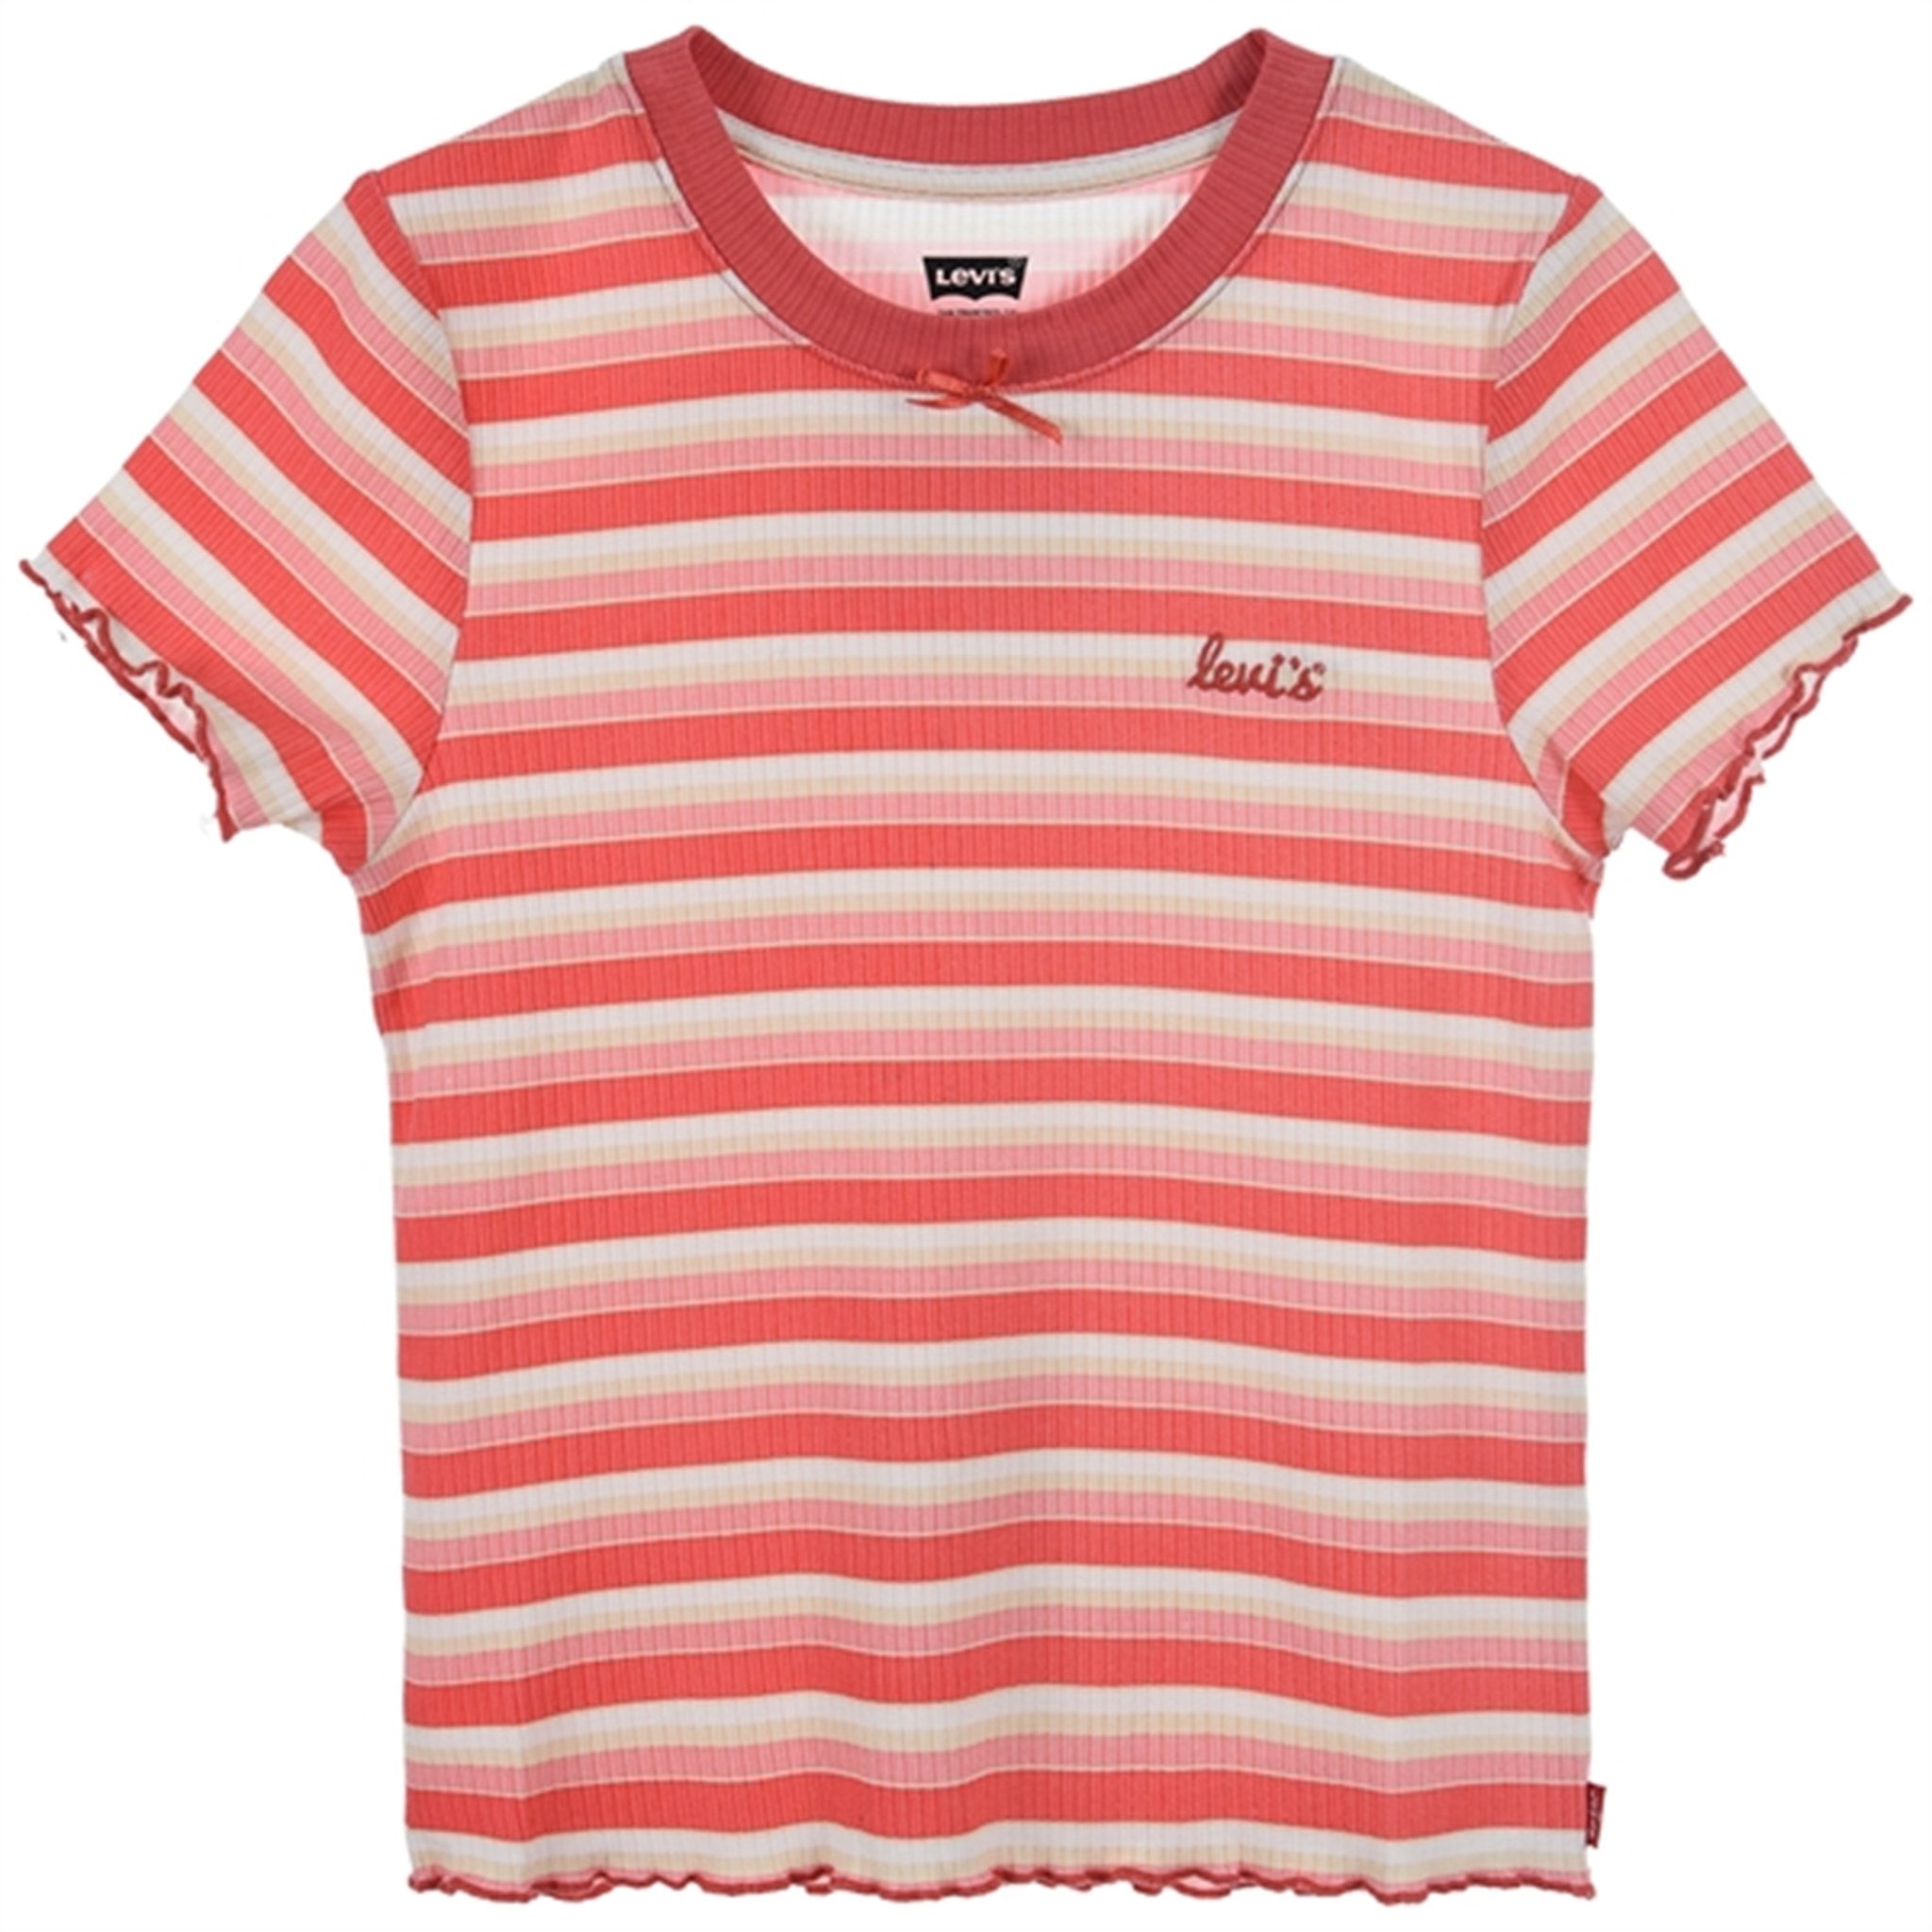 Levi's Striped Meet and Greet T-shirt Pink